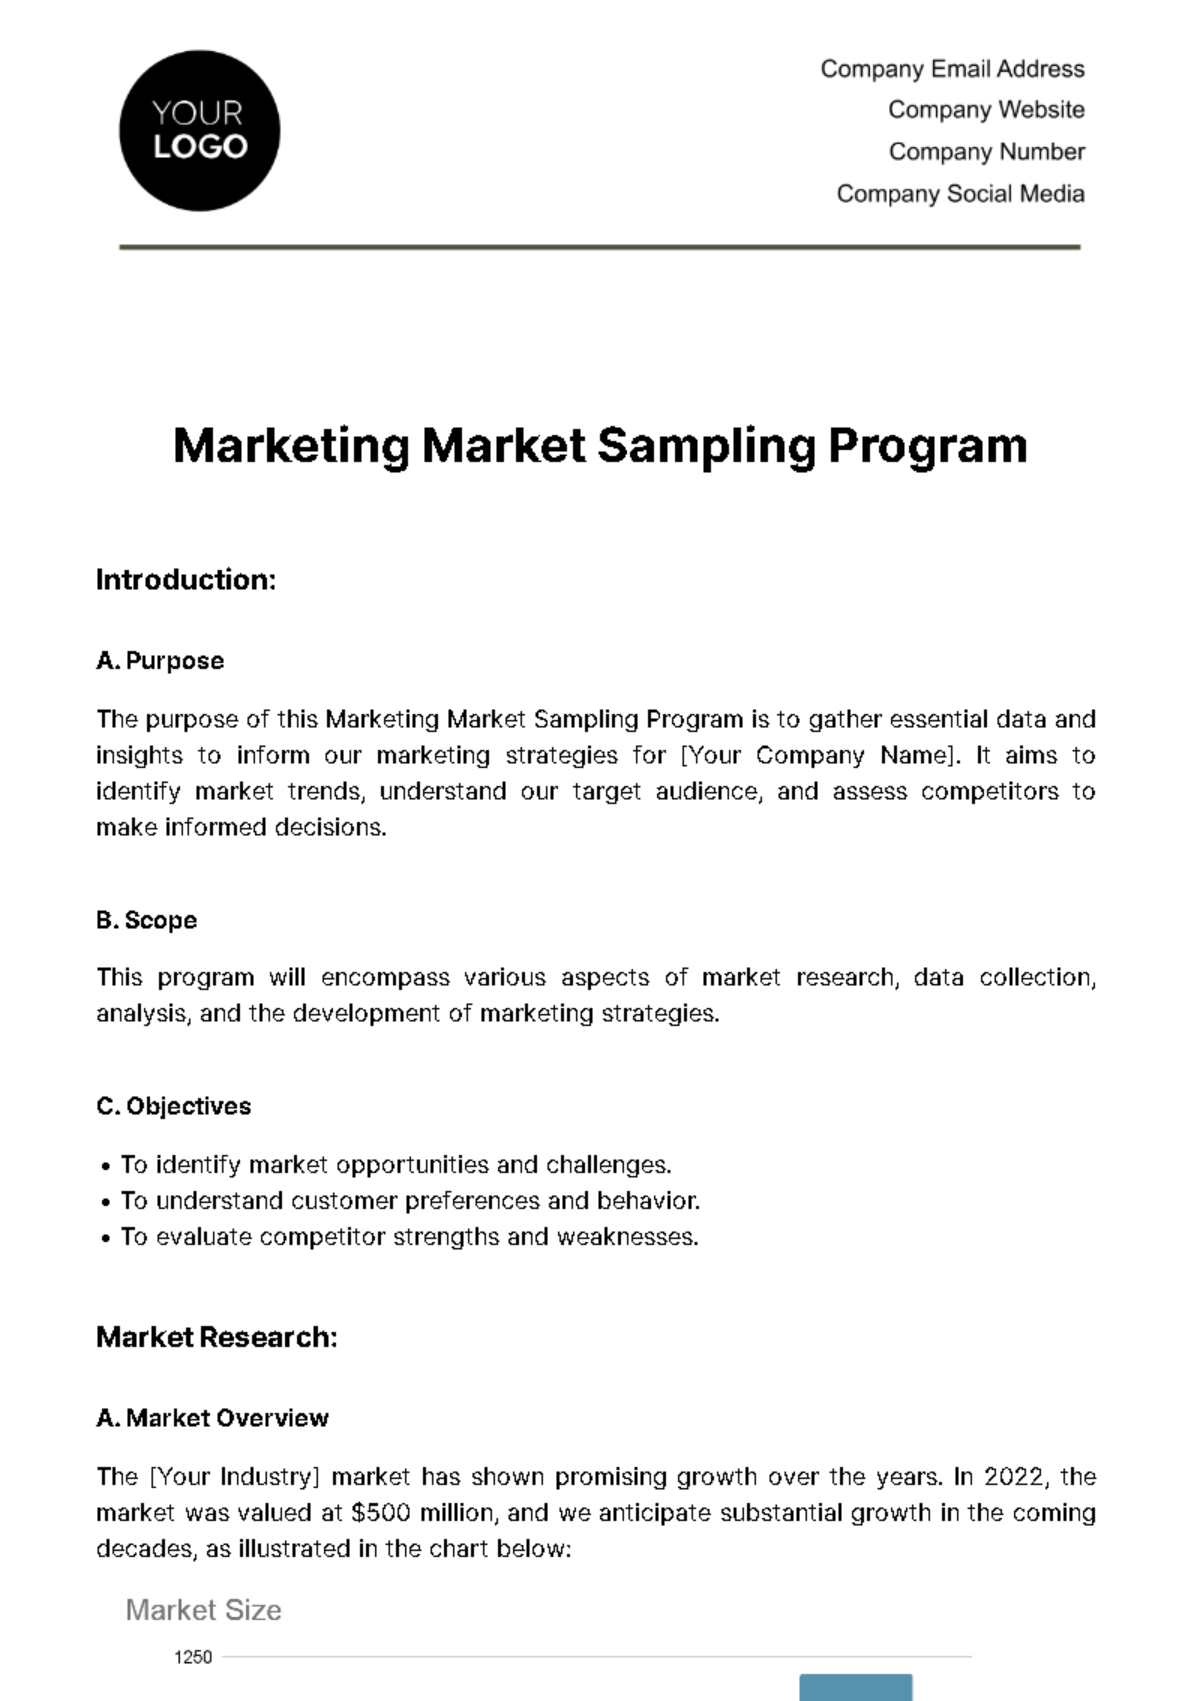 Marketing Market Sampling Program Template